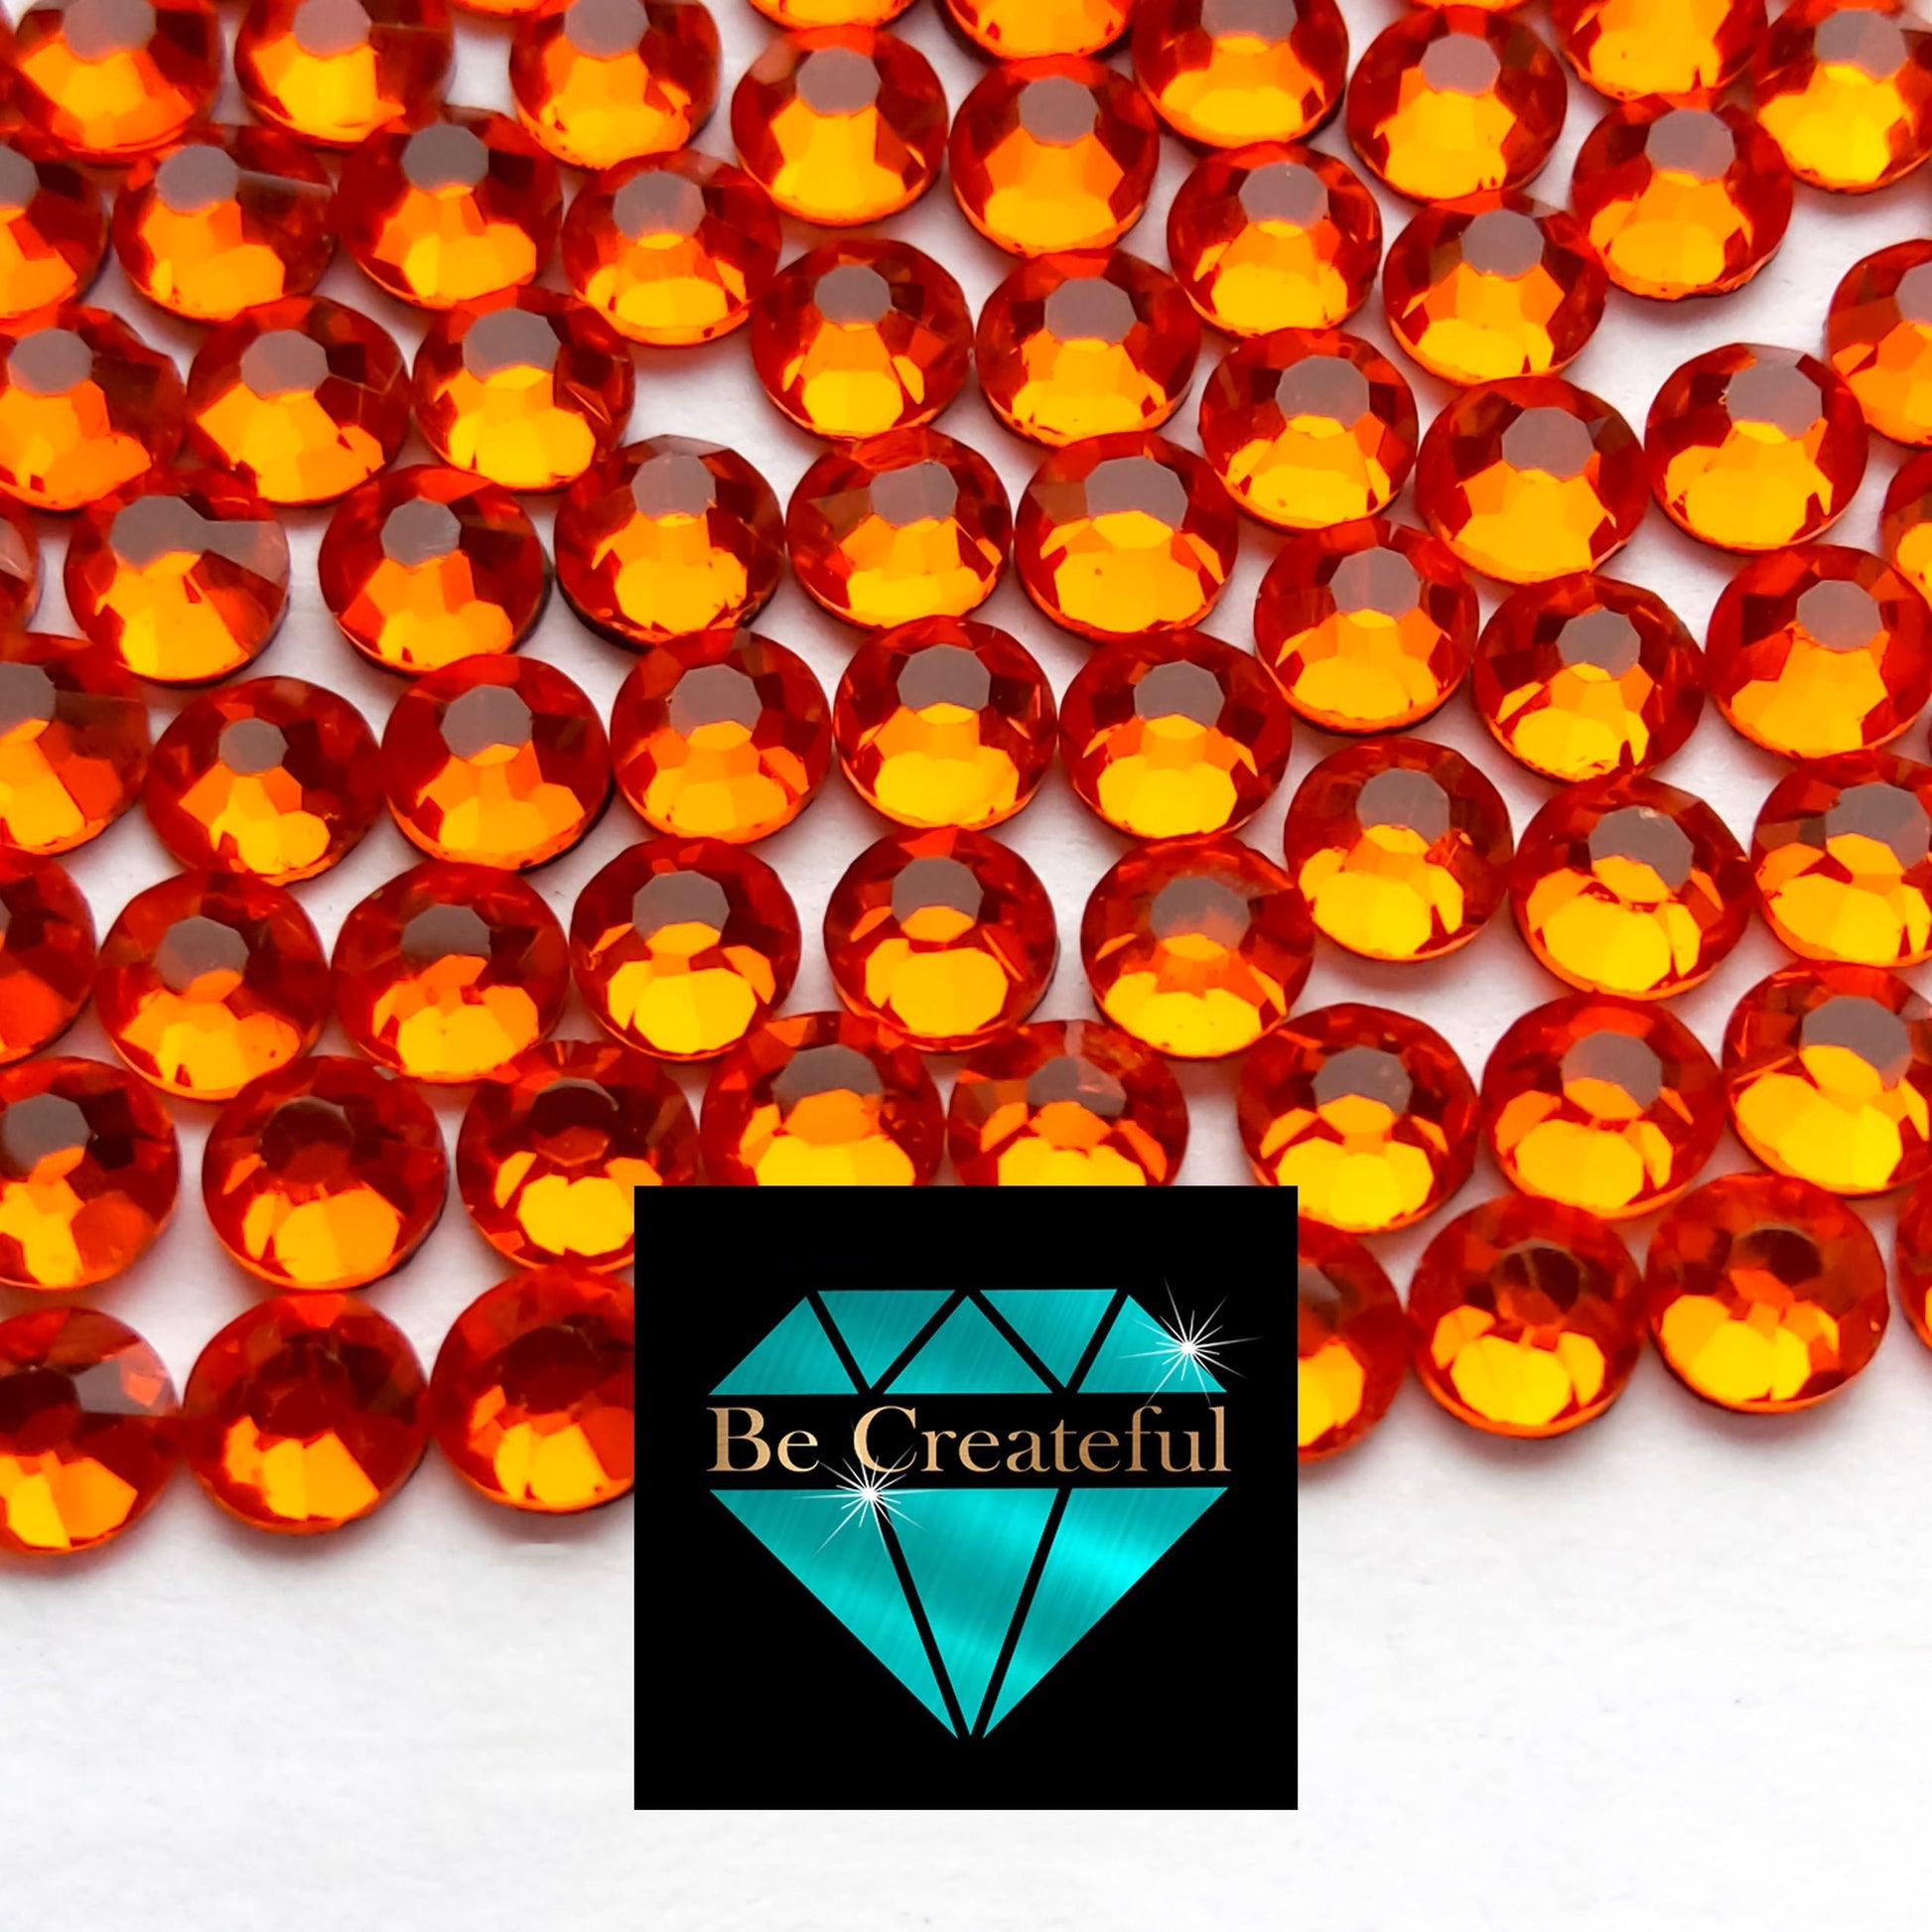 DMC Orange Glass Hotfix Rhinestones - Be Createful, Beautiful Rhinestones at wholesale prices.